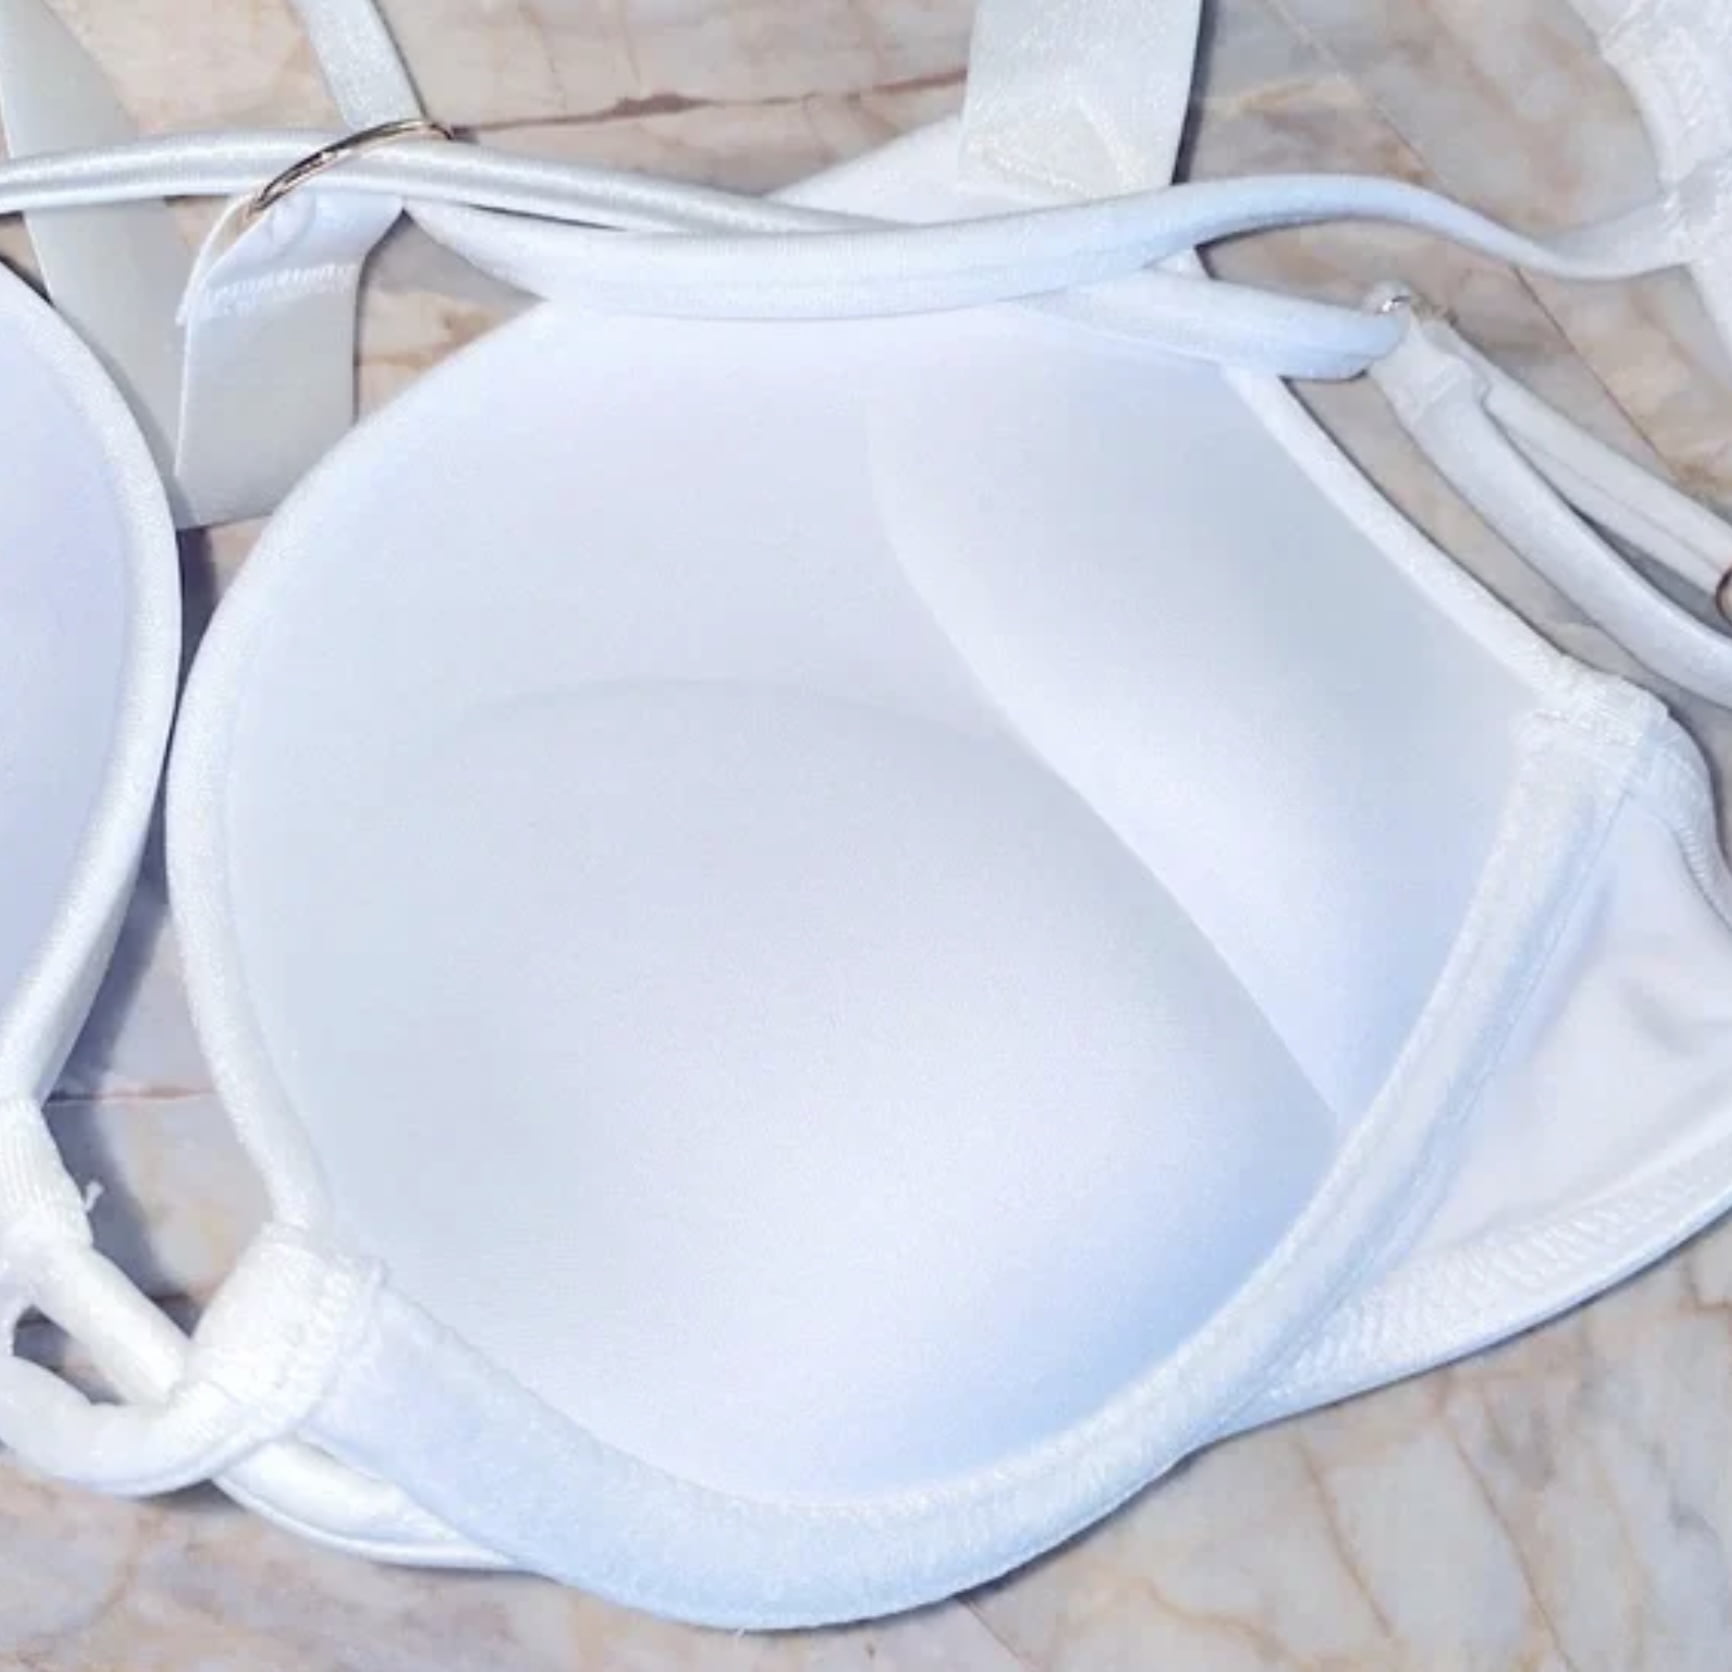 Buy Victoria's Secret Bombshell Push-Up Bra: 34B White - Adds 2